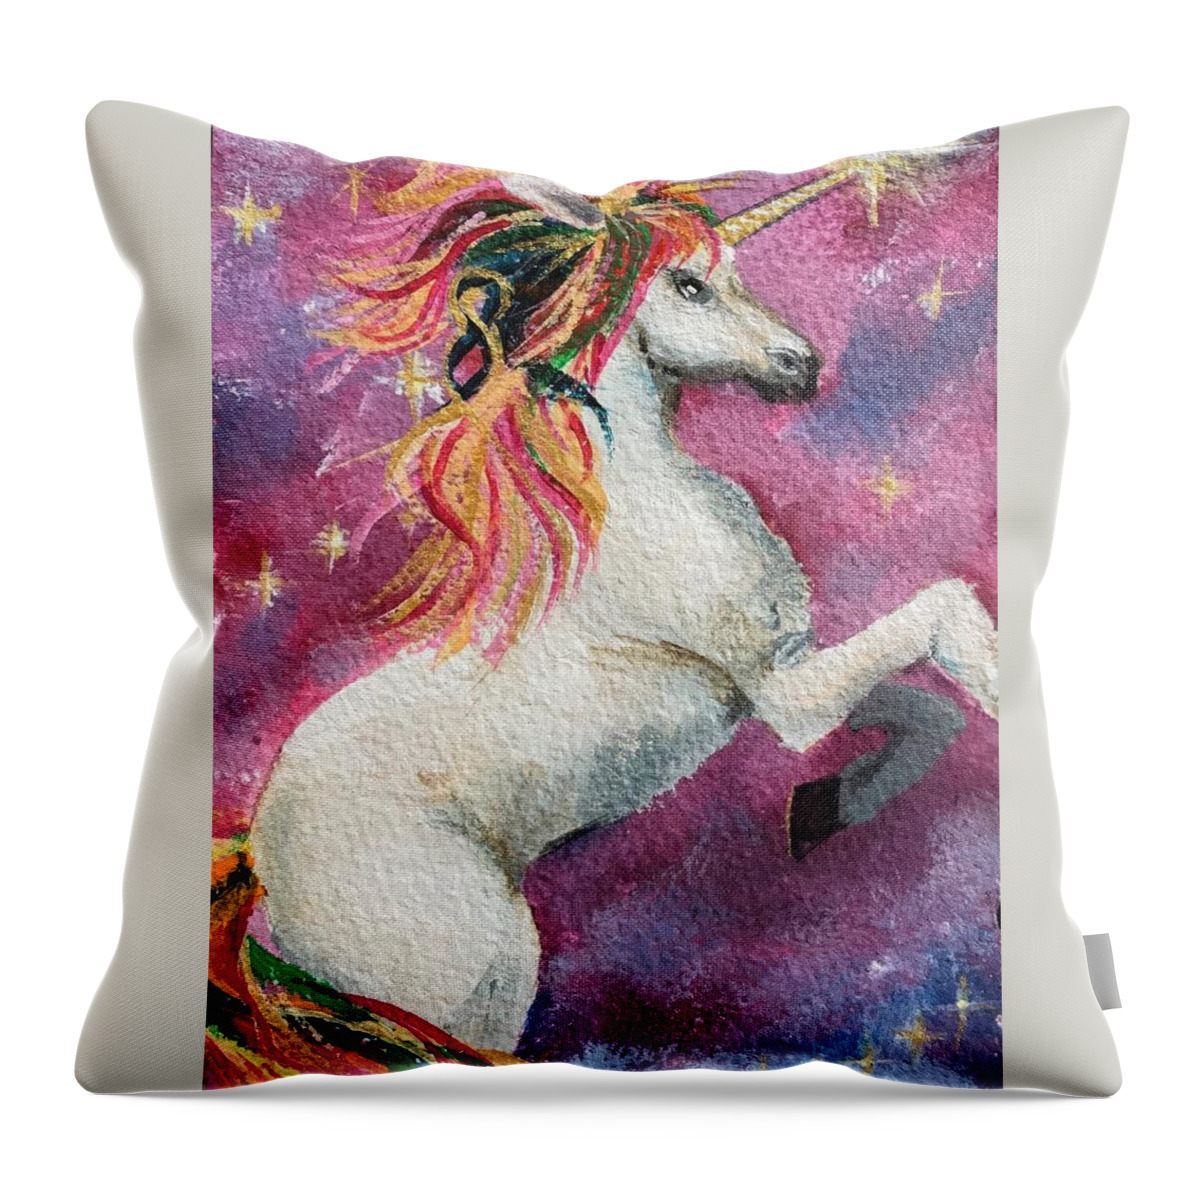 Unicorn Throw Pillow featuring the painting Unicorn Magic by Deborah Naves